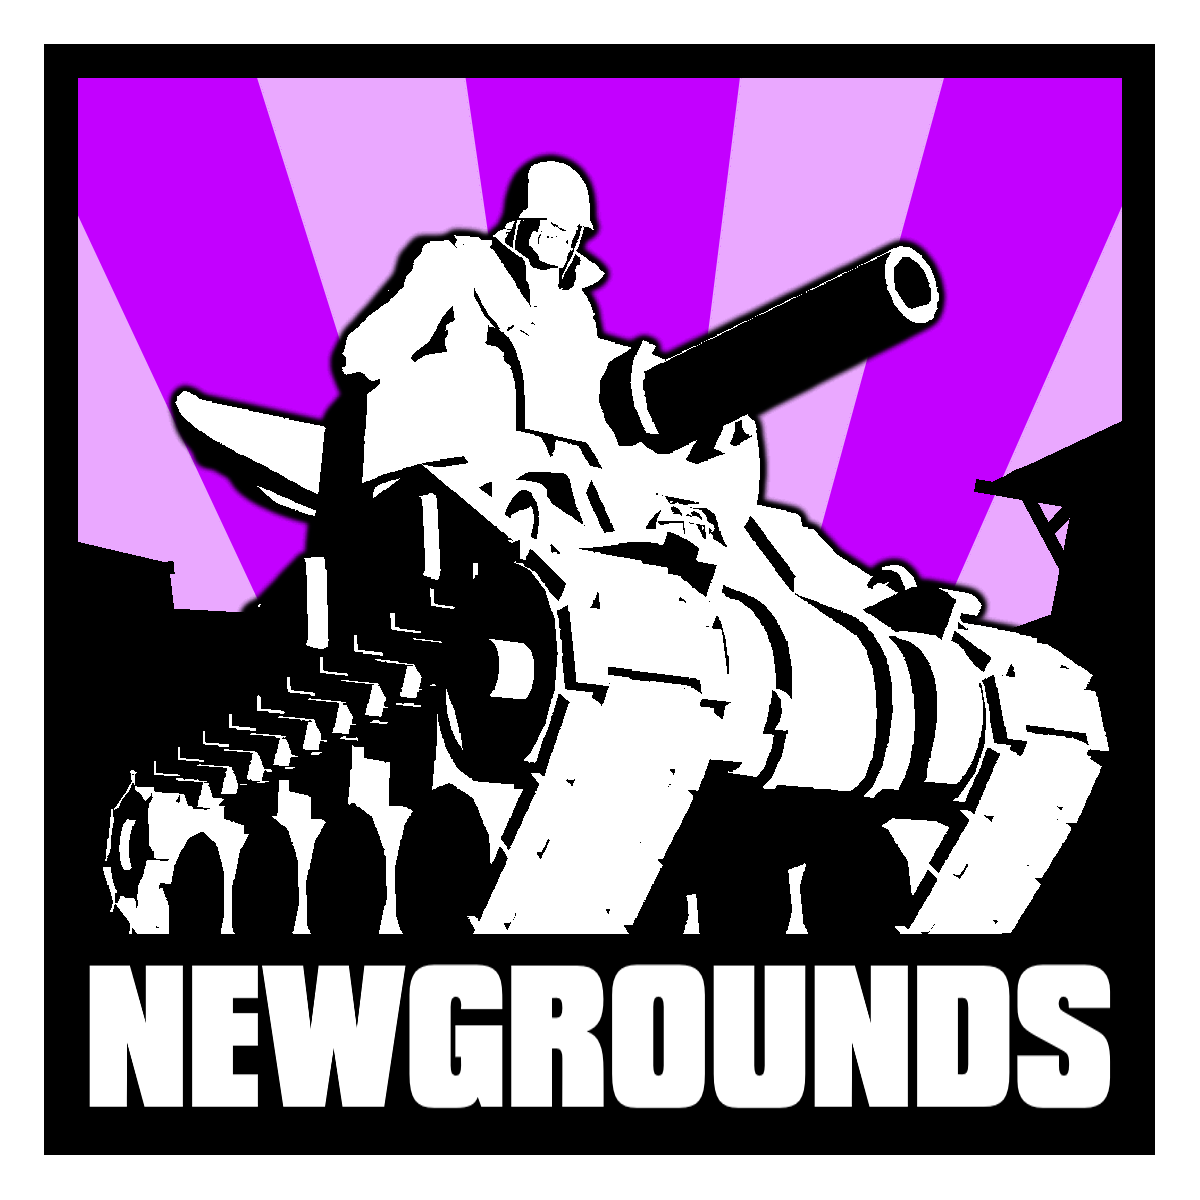 newgrounds logo in that vid looks like